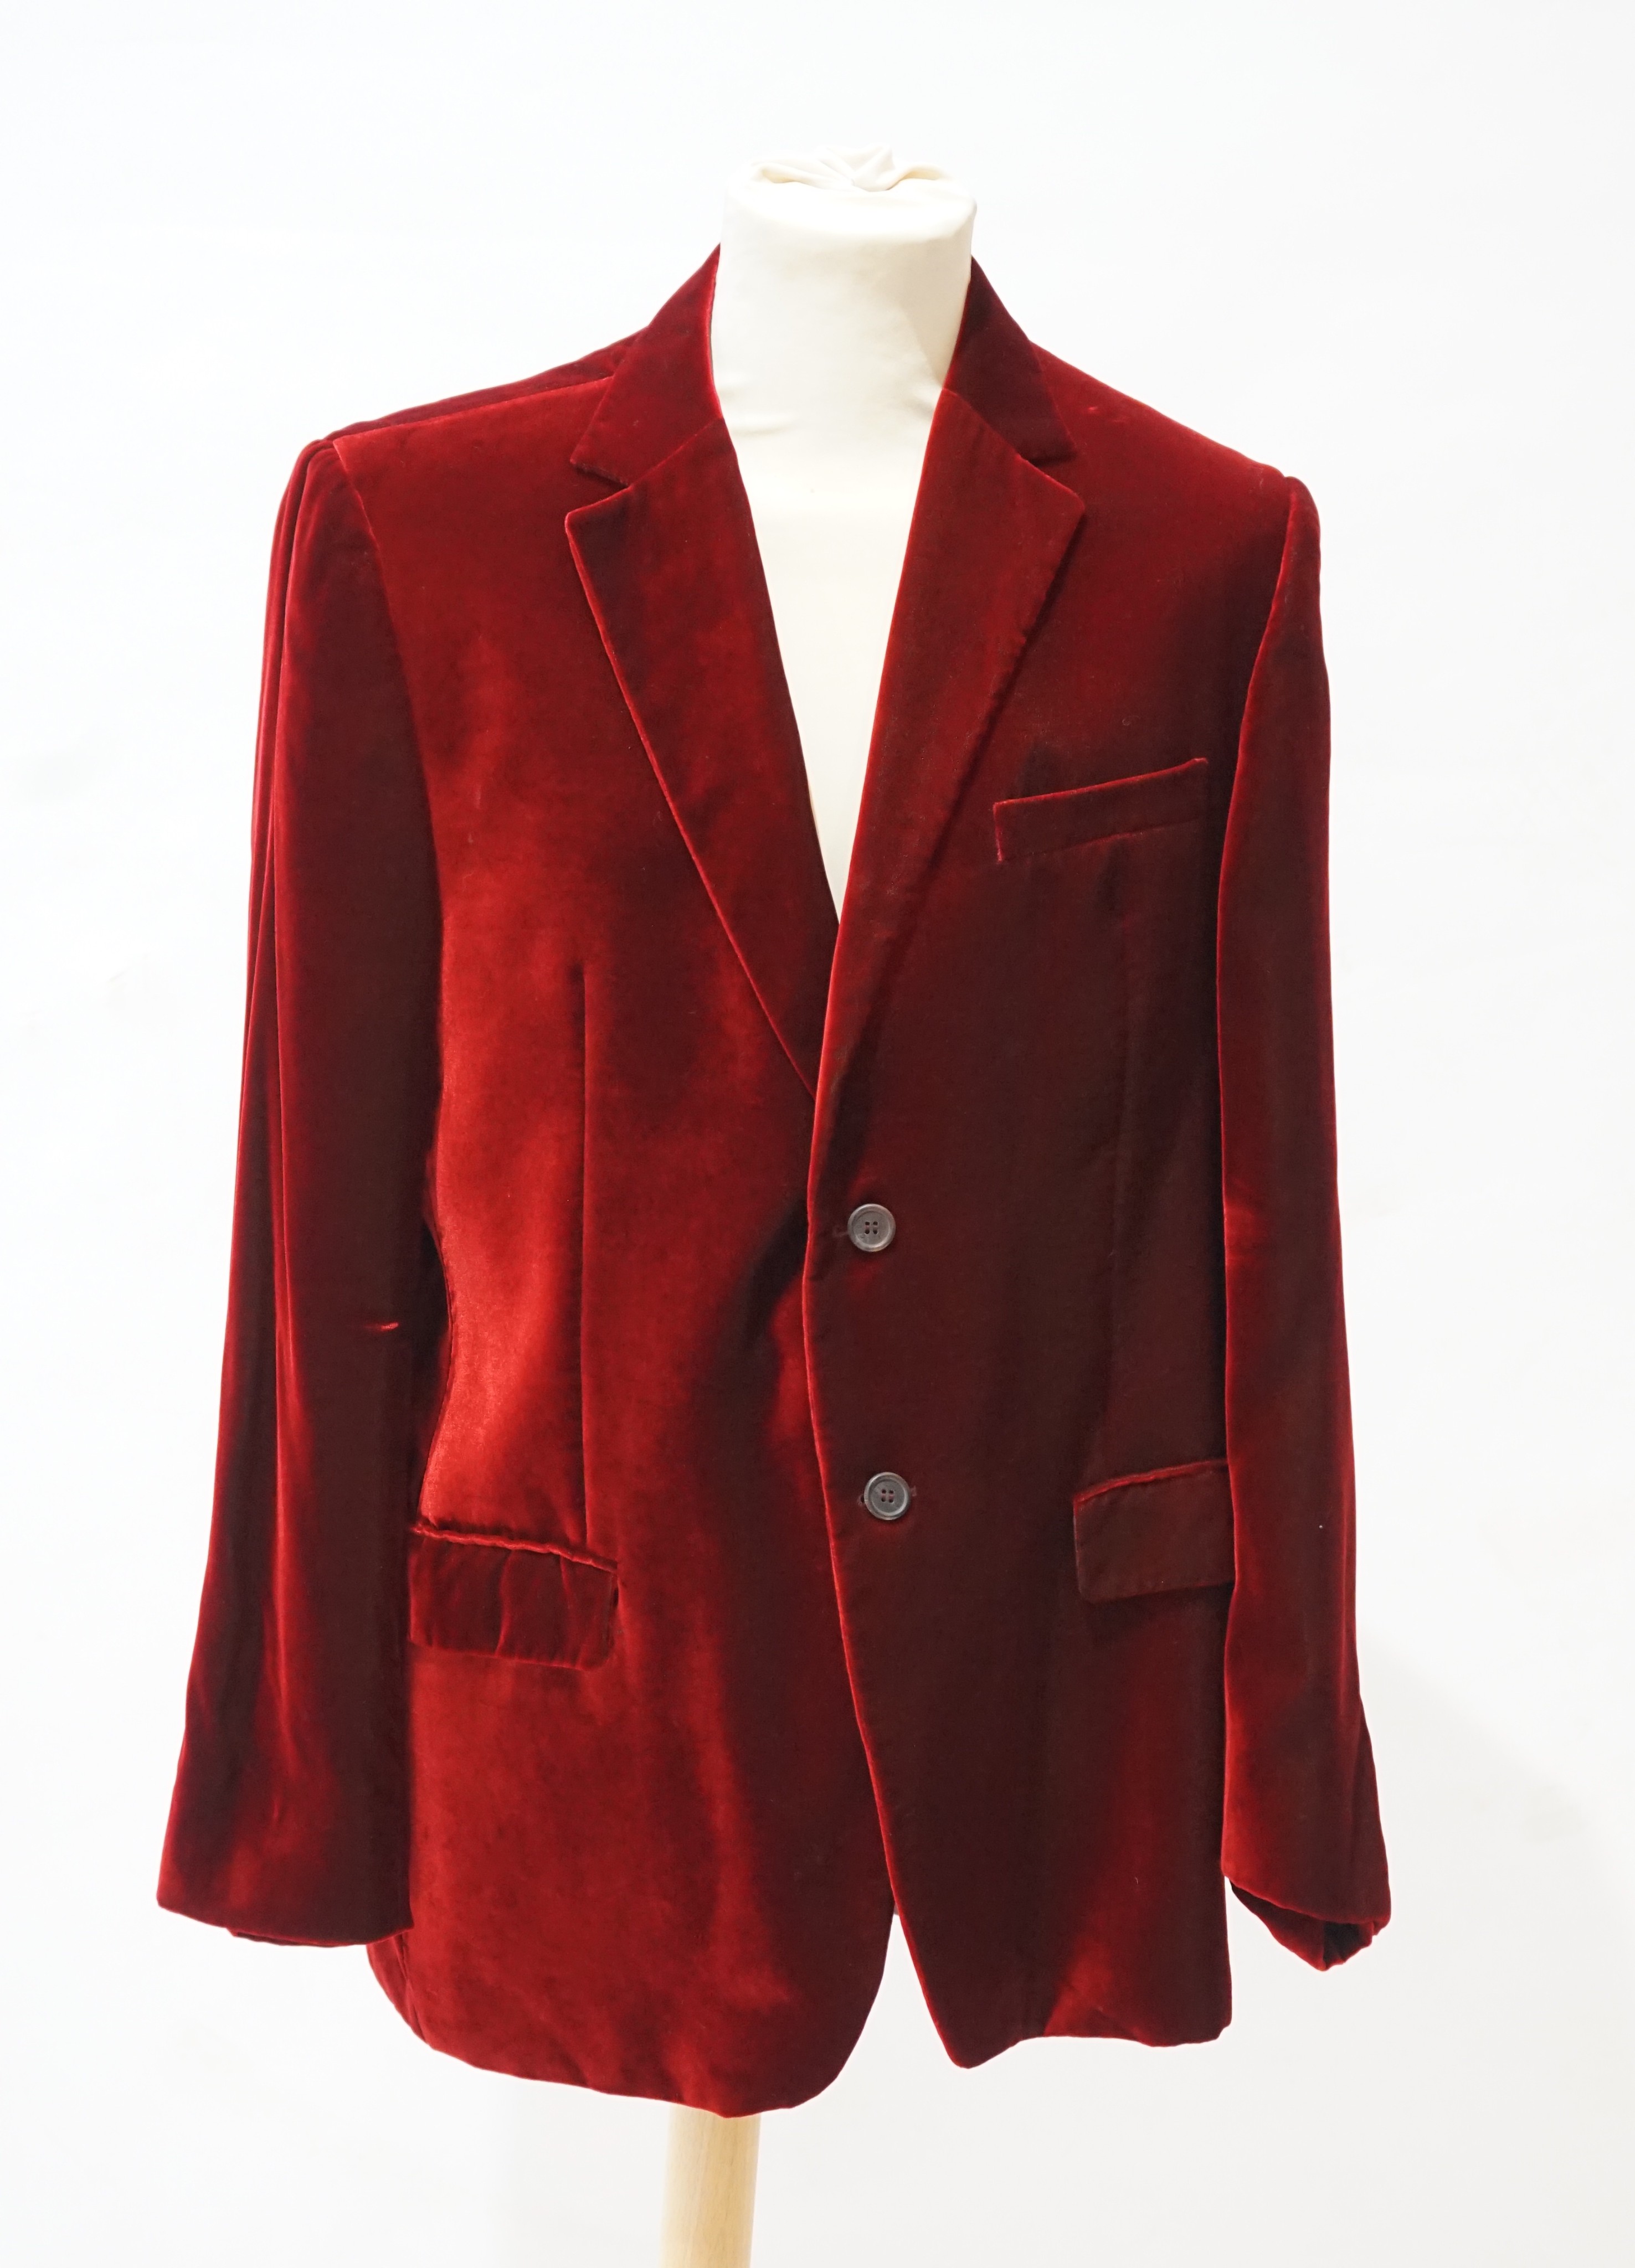 A gentleman's Gucci rich red velvet blazer with original ticket, Italian size 52, UK size 48